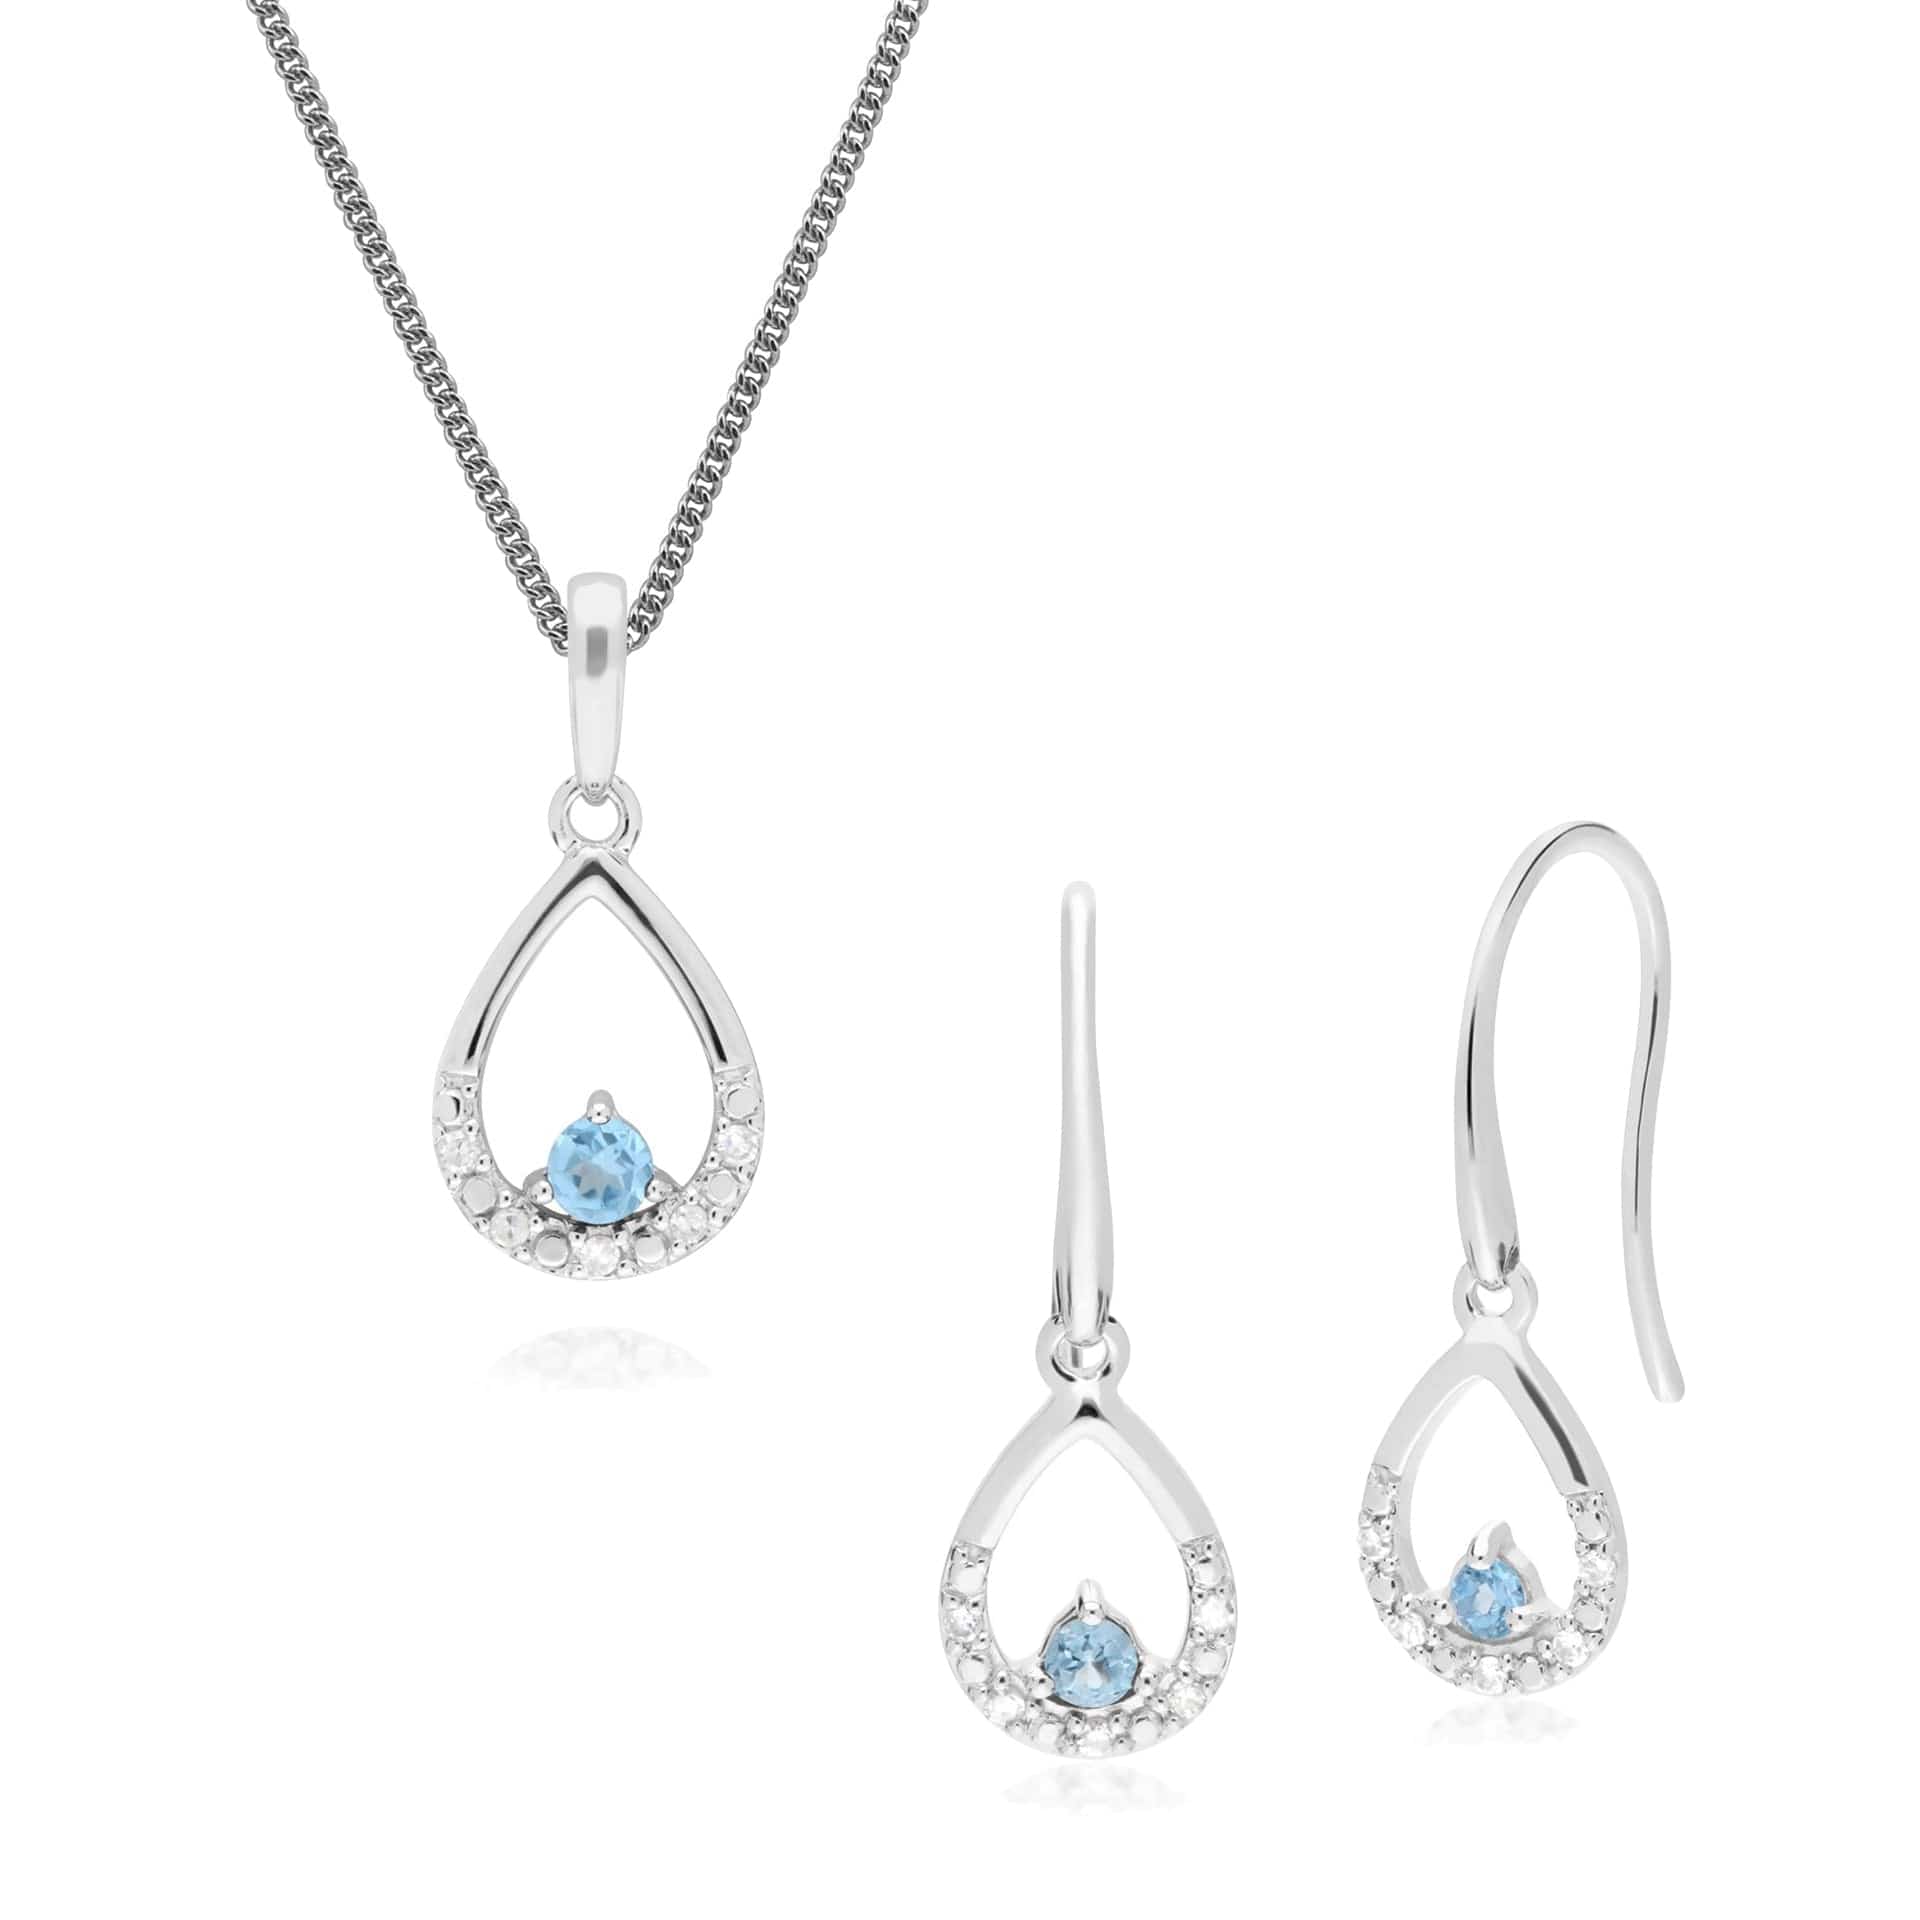 162E0259069-162P0220619 Classic Round Blue Topaz & Diamond Tear Drop Earrings & Pendant Set in 9ct White Gold 1